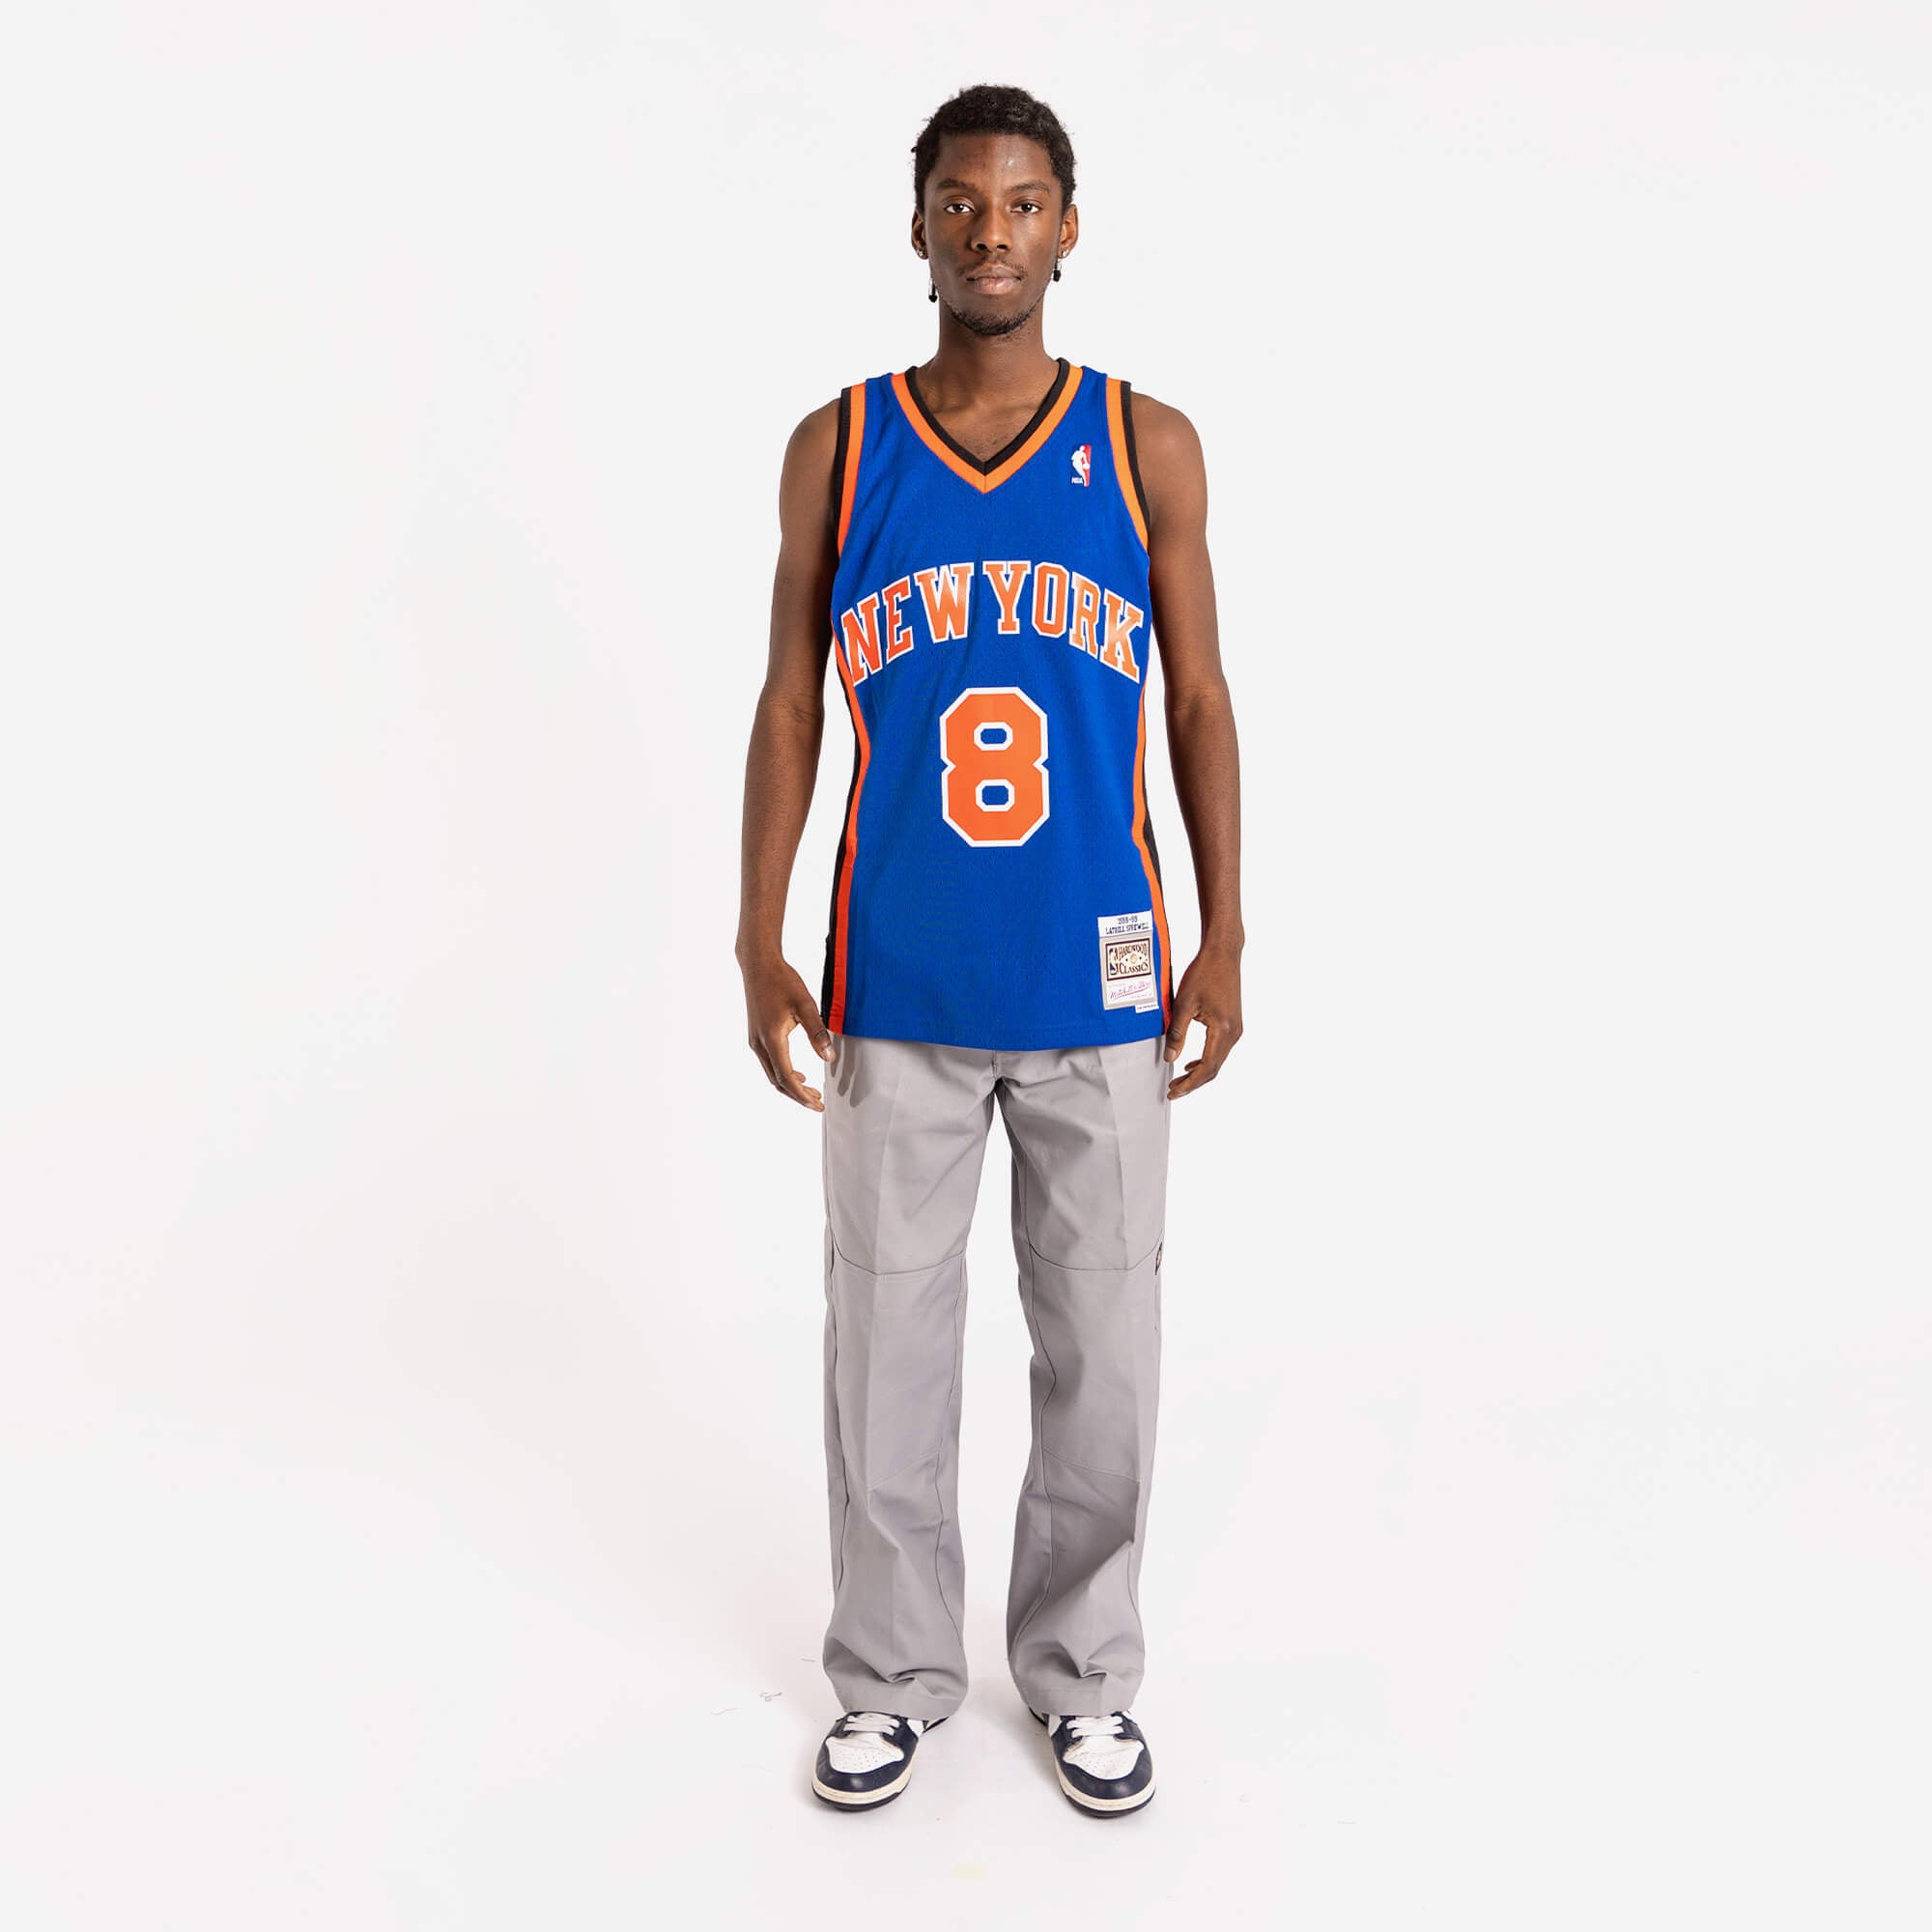 NYP2000011103-NEW YORK, NEW YORK, USA: New York Knick's Latrell